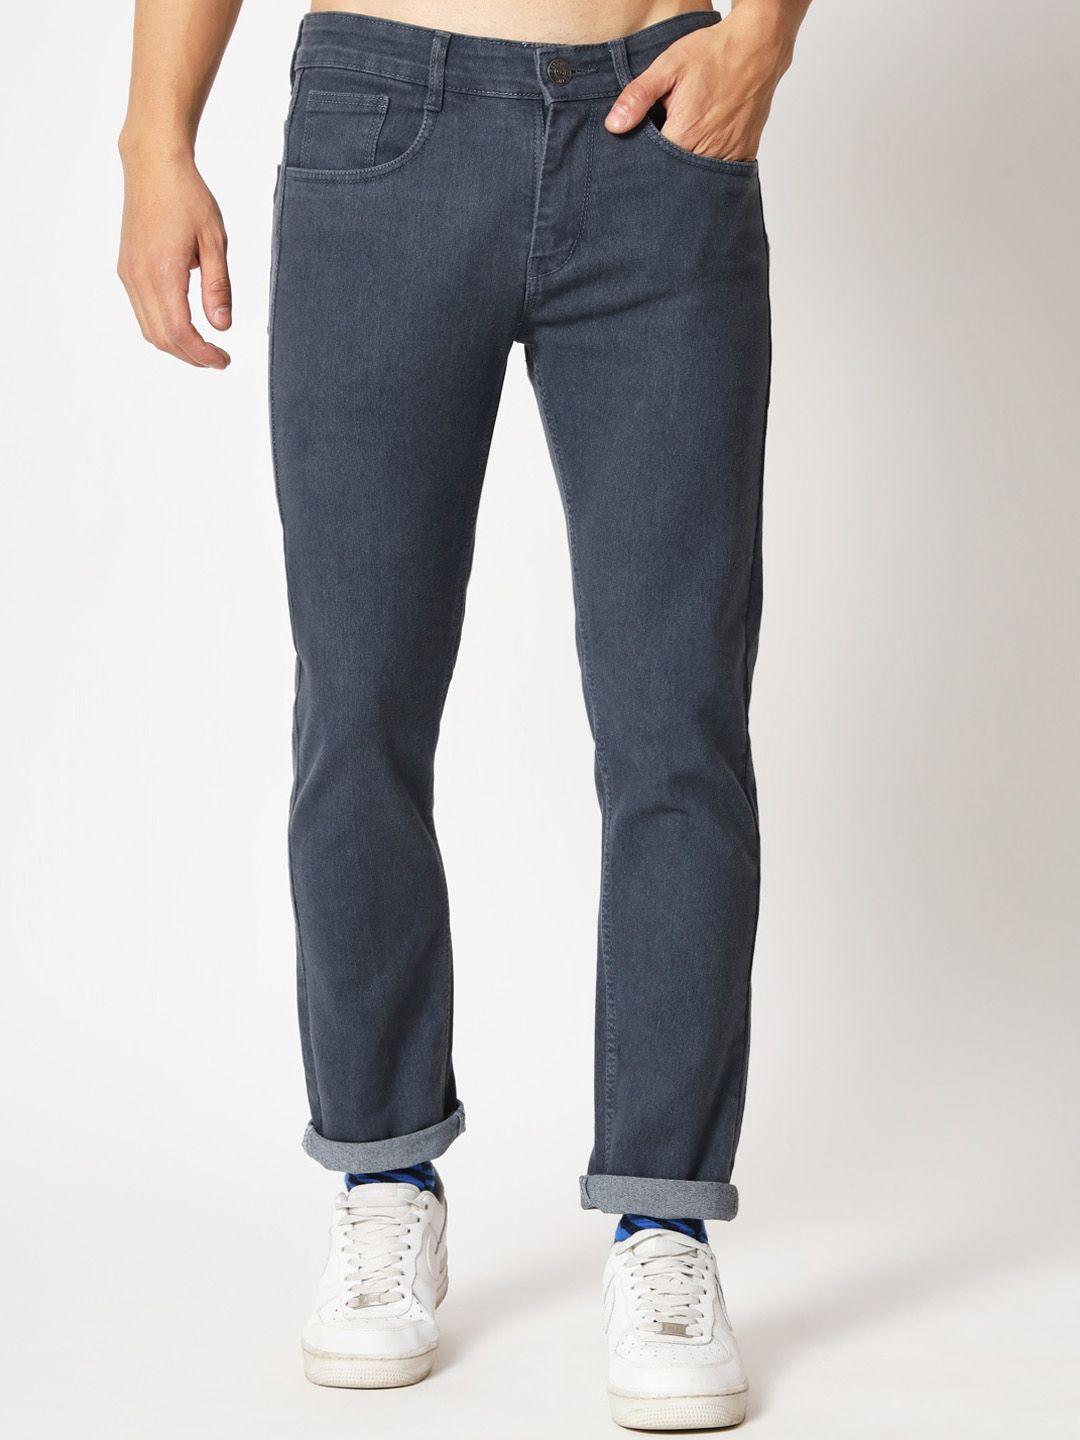 ragzo-men-grey-slim-fit-low-rise-stretchable-jeans